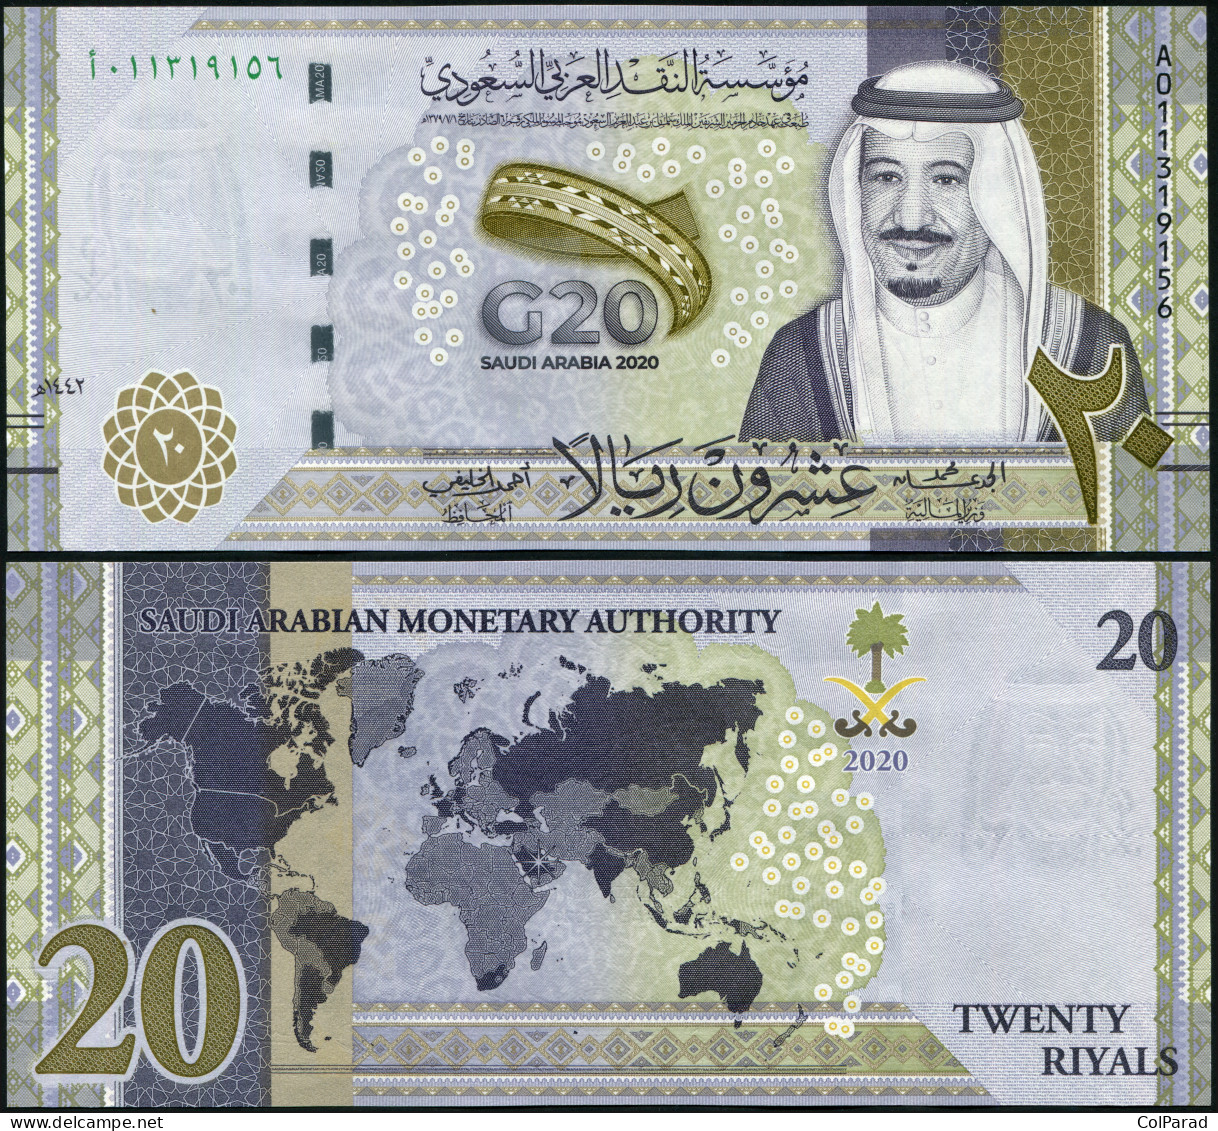 SAUDI ARABIA 20 RIYALS - 2020 - Paper Unc - P.NL Banknote - G20 Summit - Arabie Saoudite